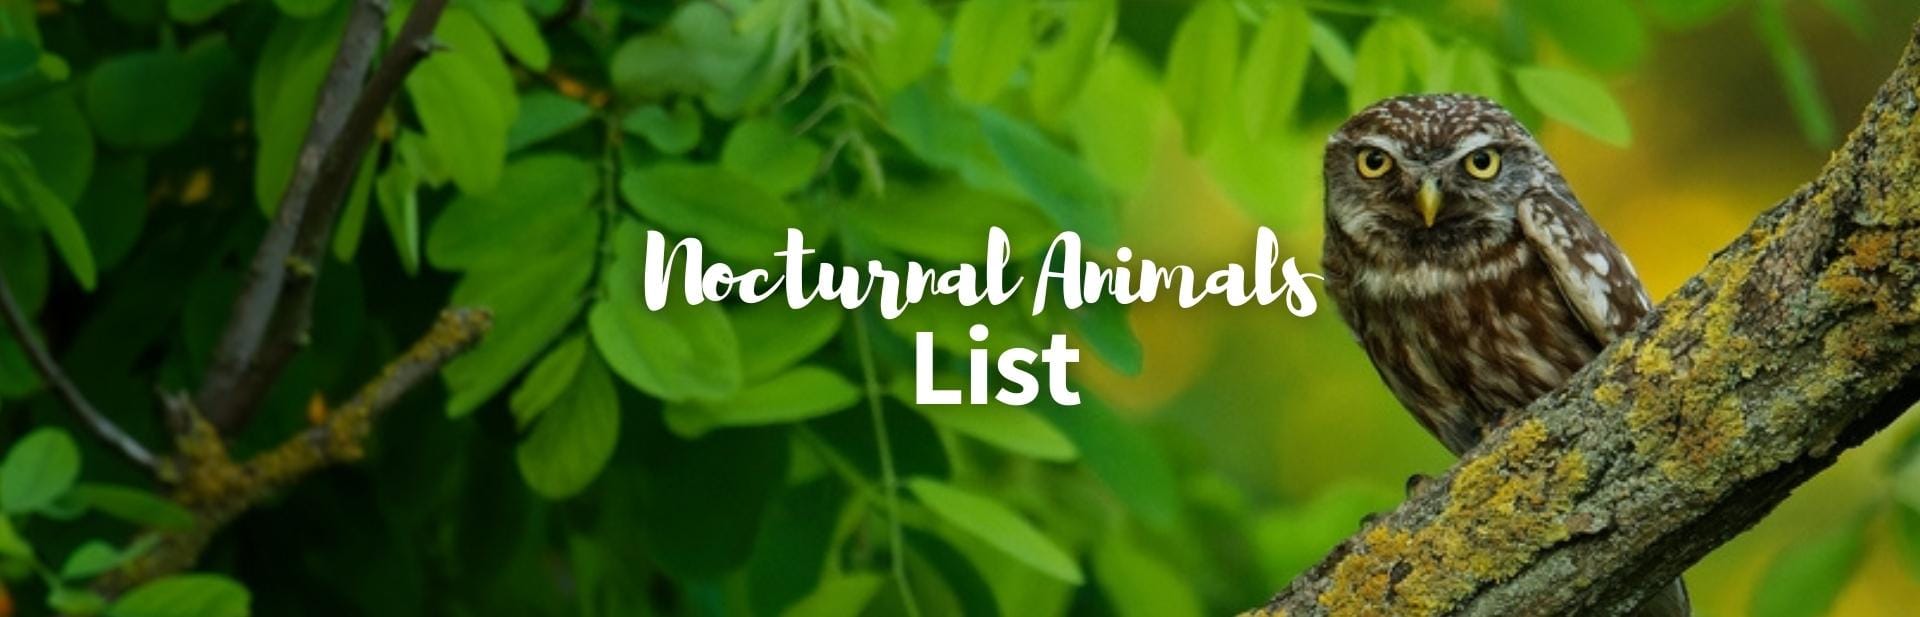 Nocturnal Animals List: What Stays Awake At Night? - Outforia